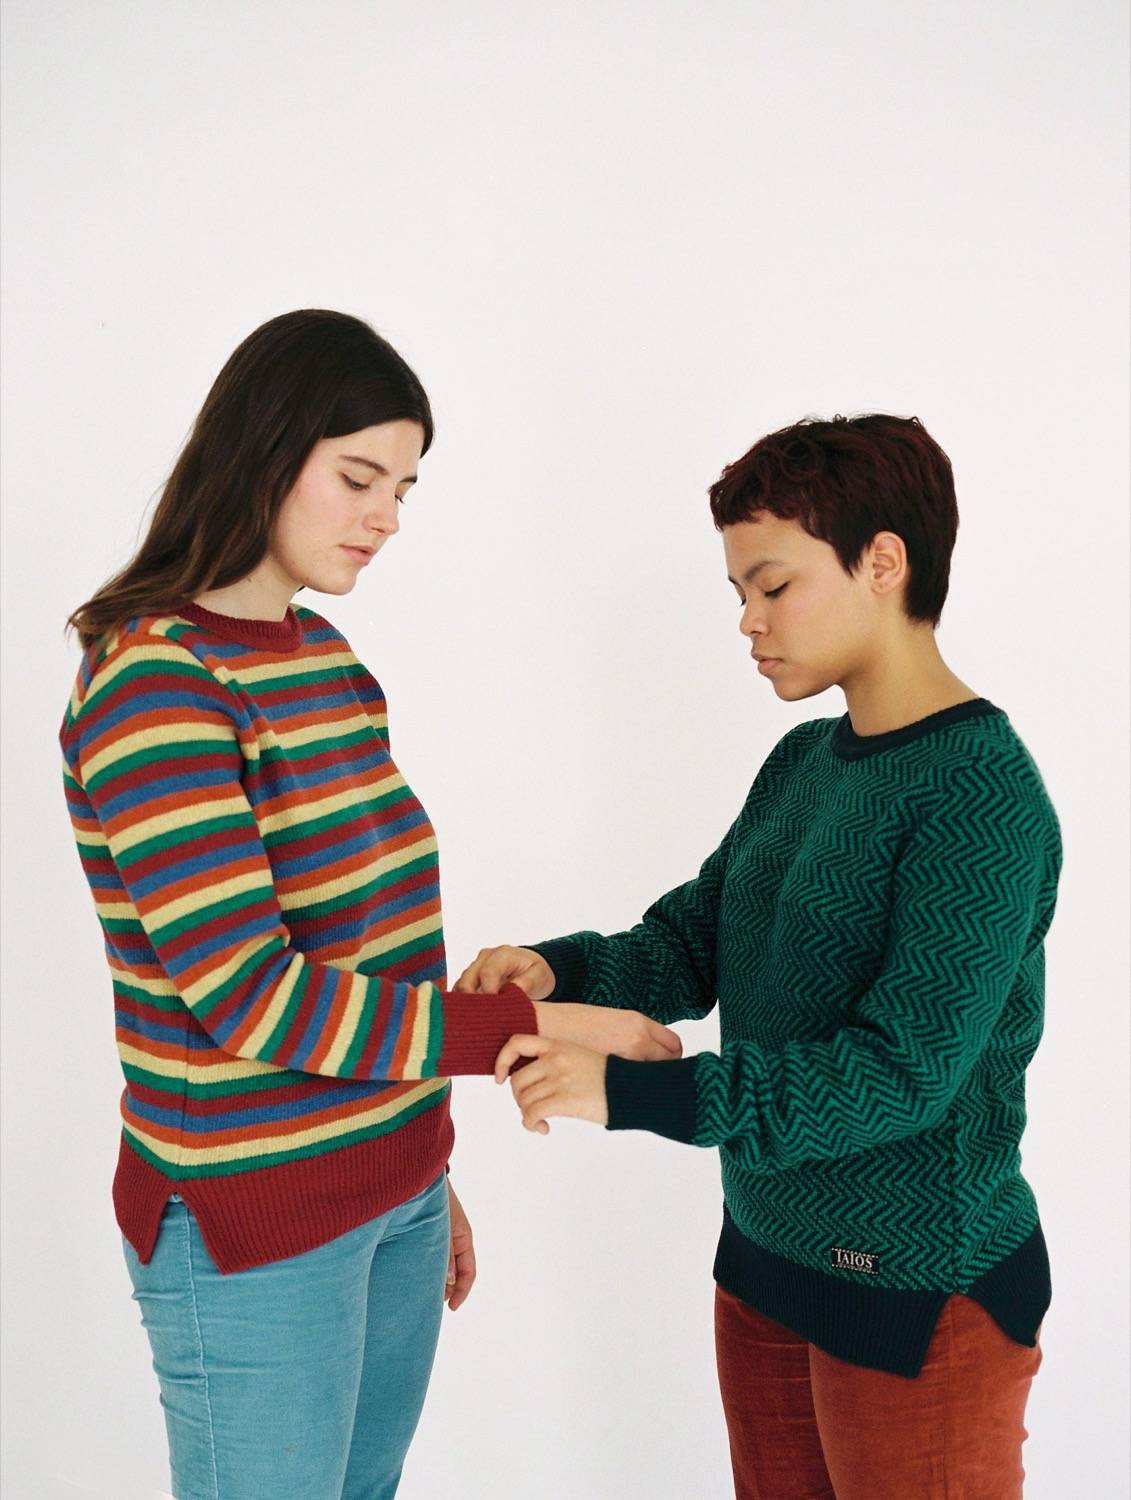 Una chica arregla la manga del jersey a otra. Ambas llevan jerseys iaios